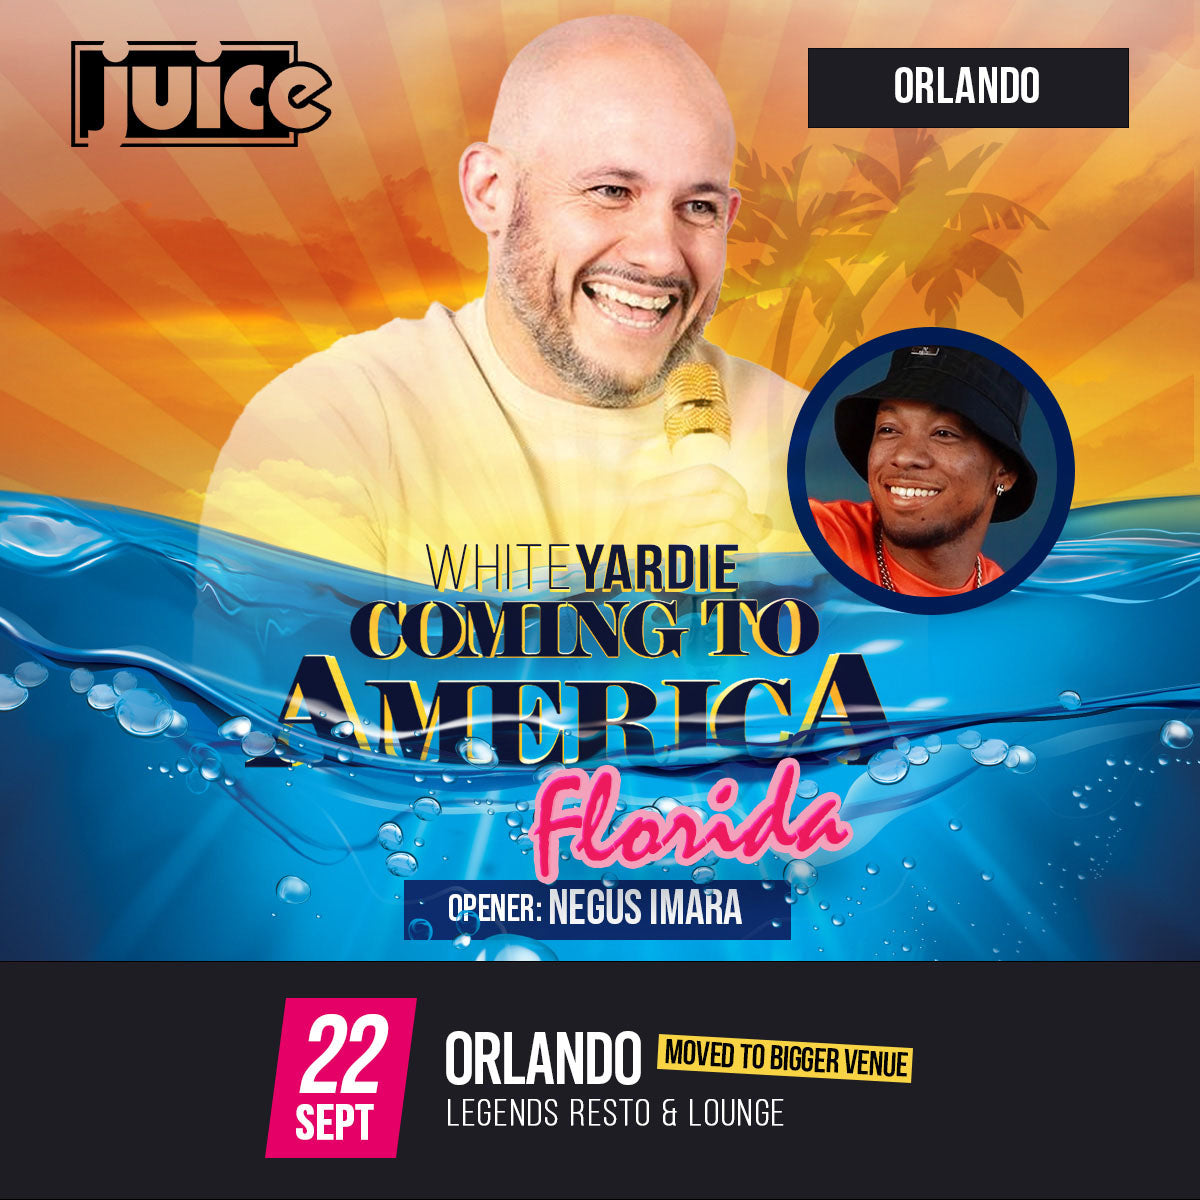 ORLANDO - JUICE Comedy pres White Yardie's "Coming to America" FLORIDA feat. Negus Imara